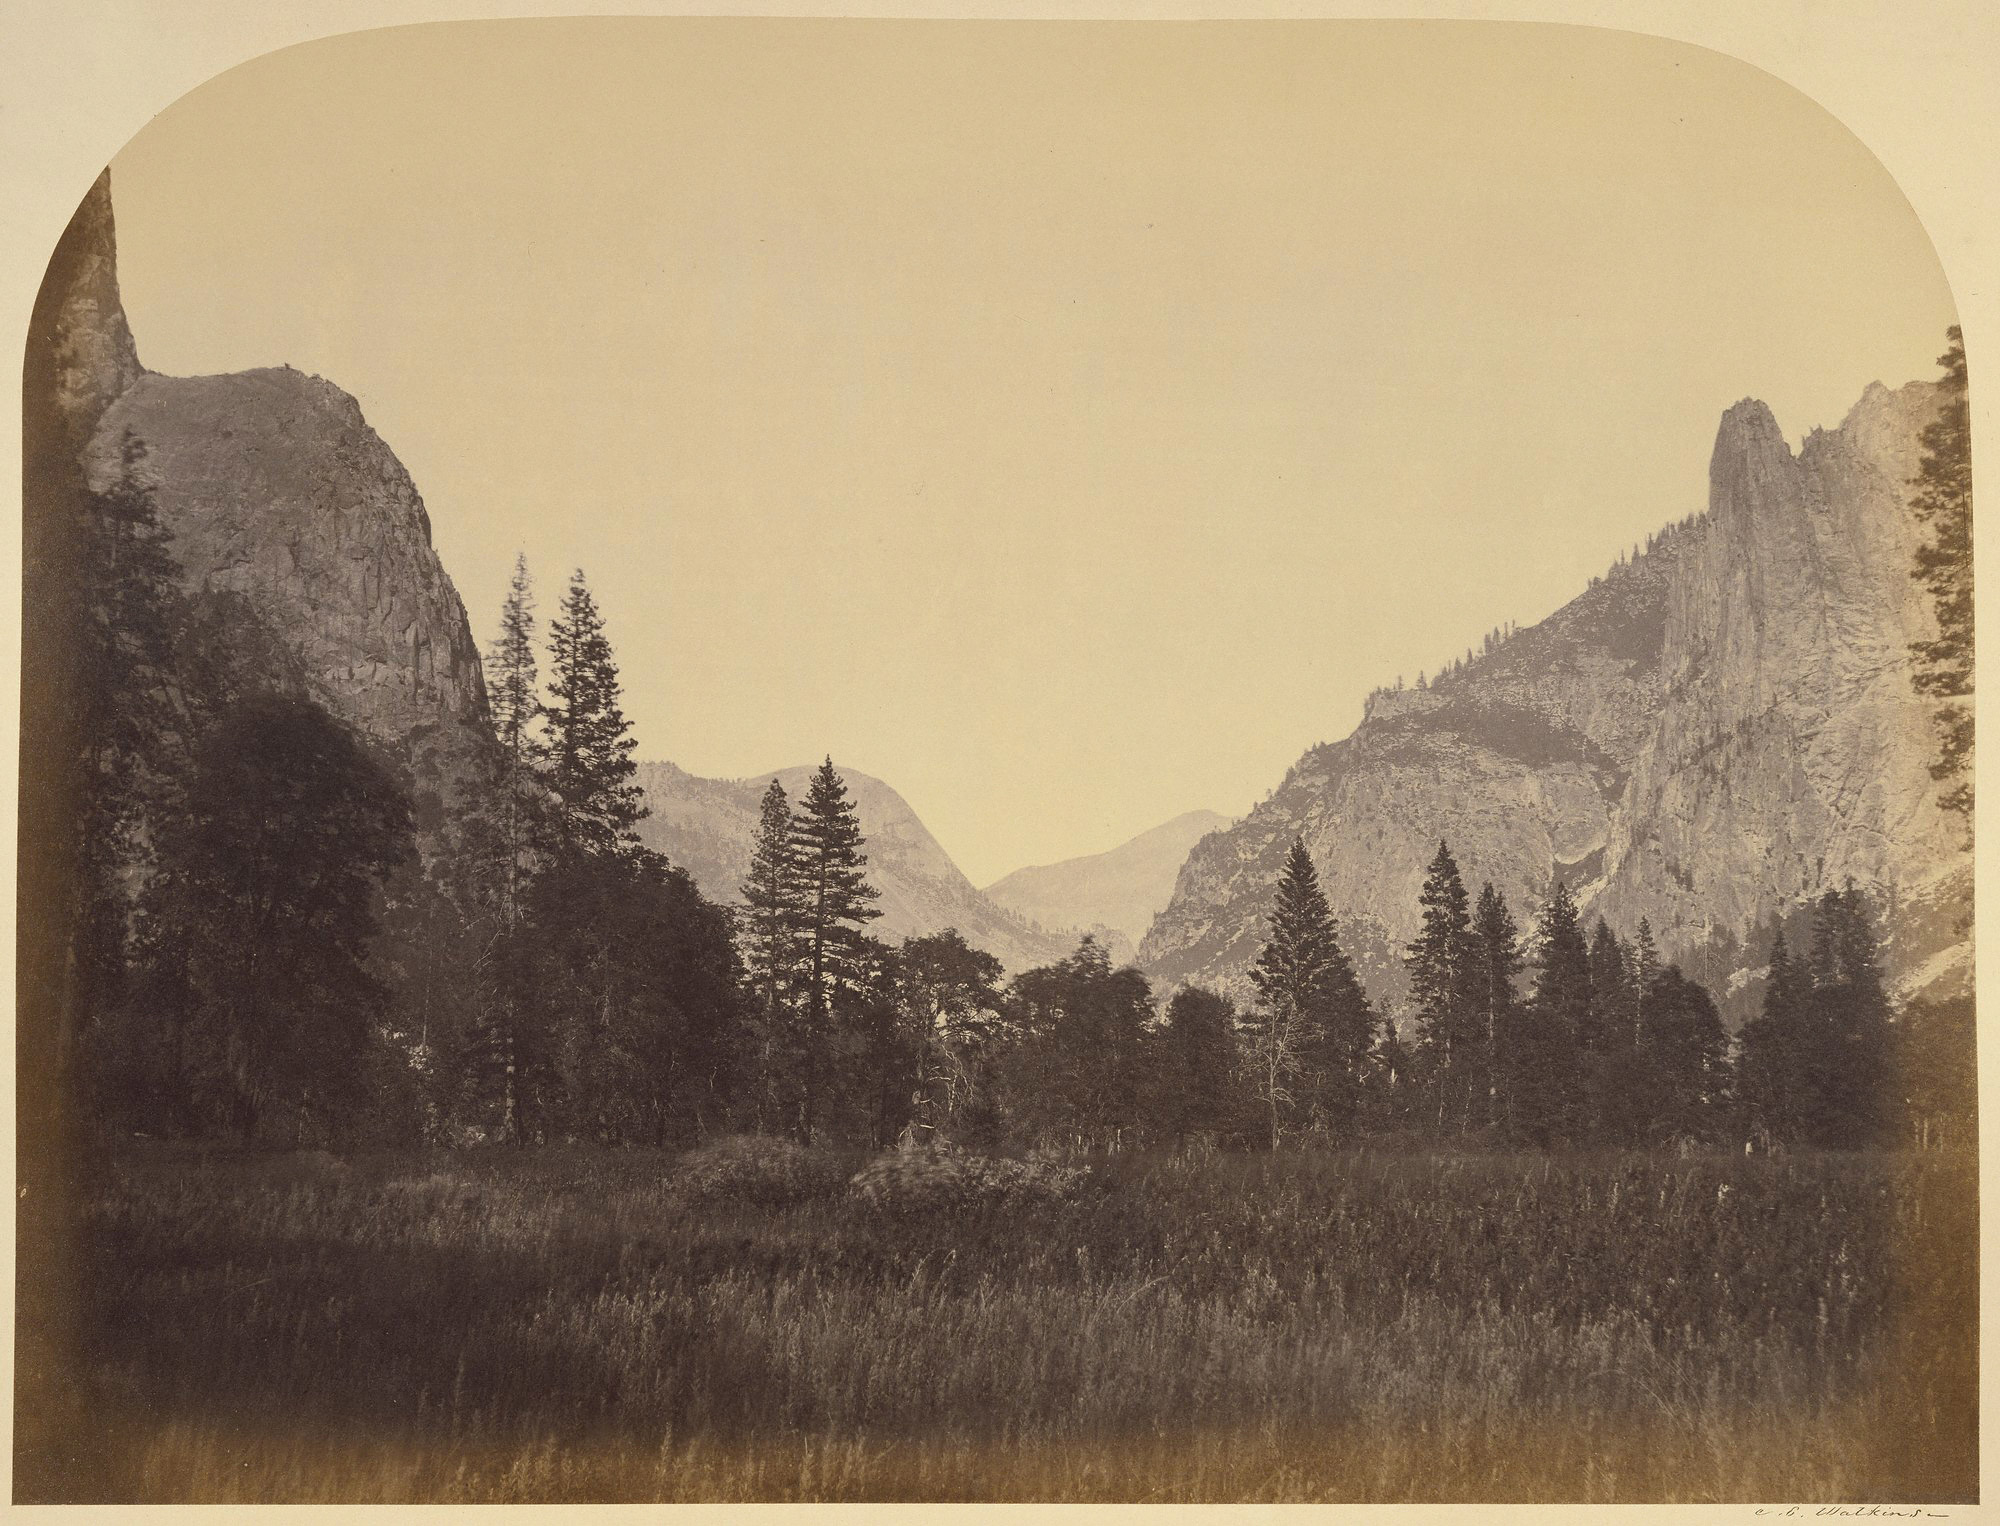 Up the Valley - Yo Semite. 1861.